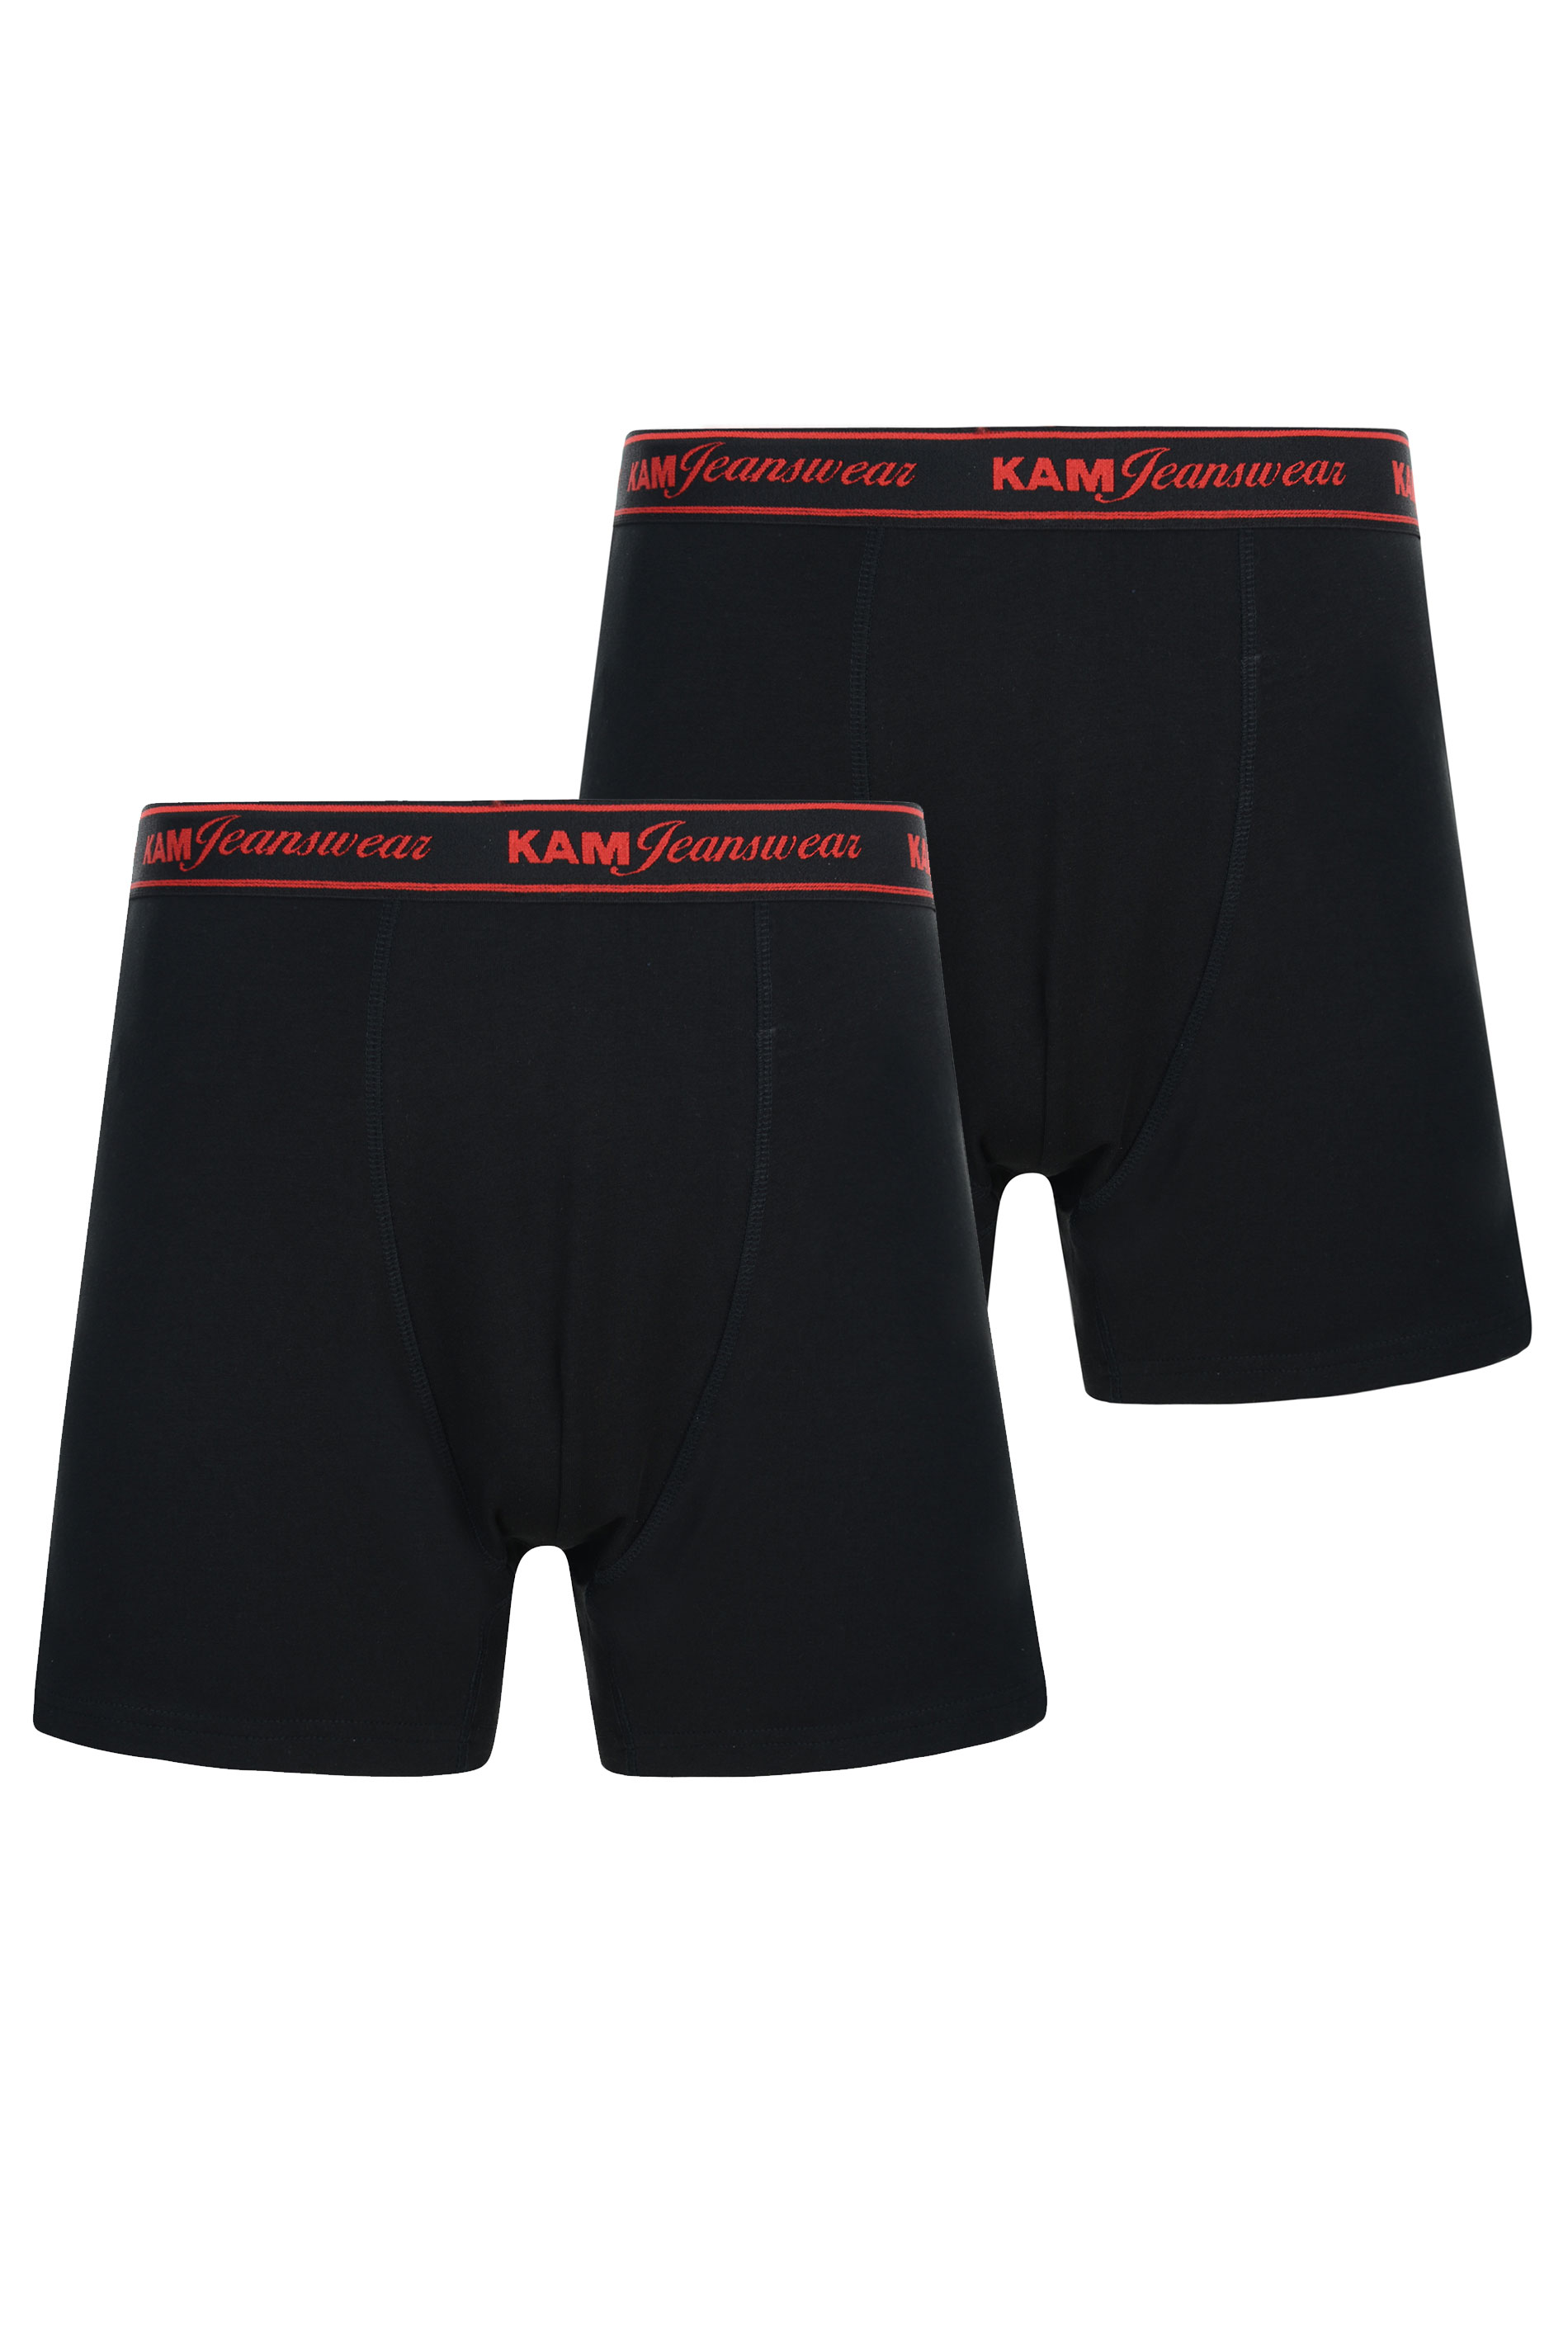 KAM Big & Tall 2 PACK Black Jersey Boxers_F.jpg